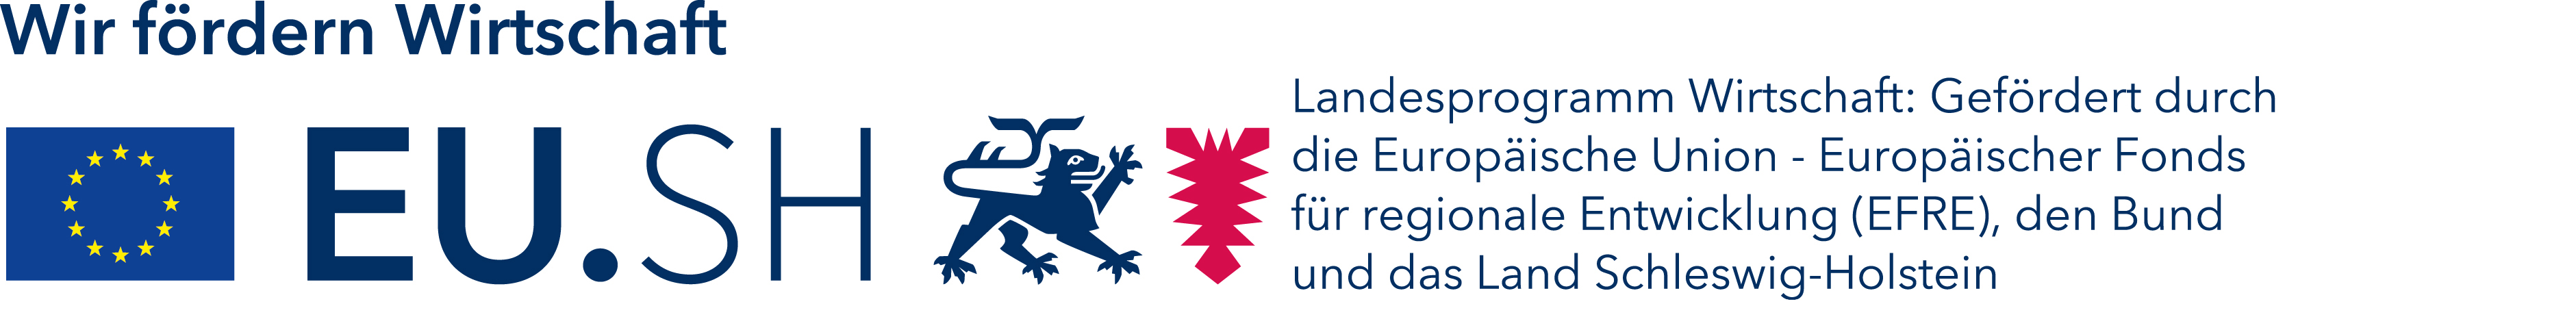 logo LPW deutsch jpg banner